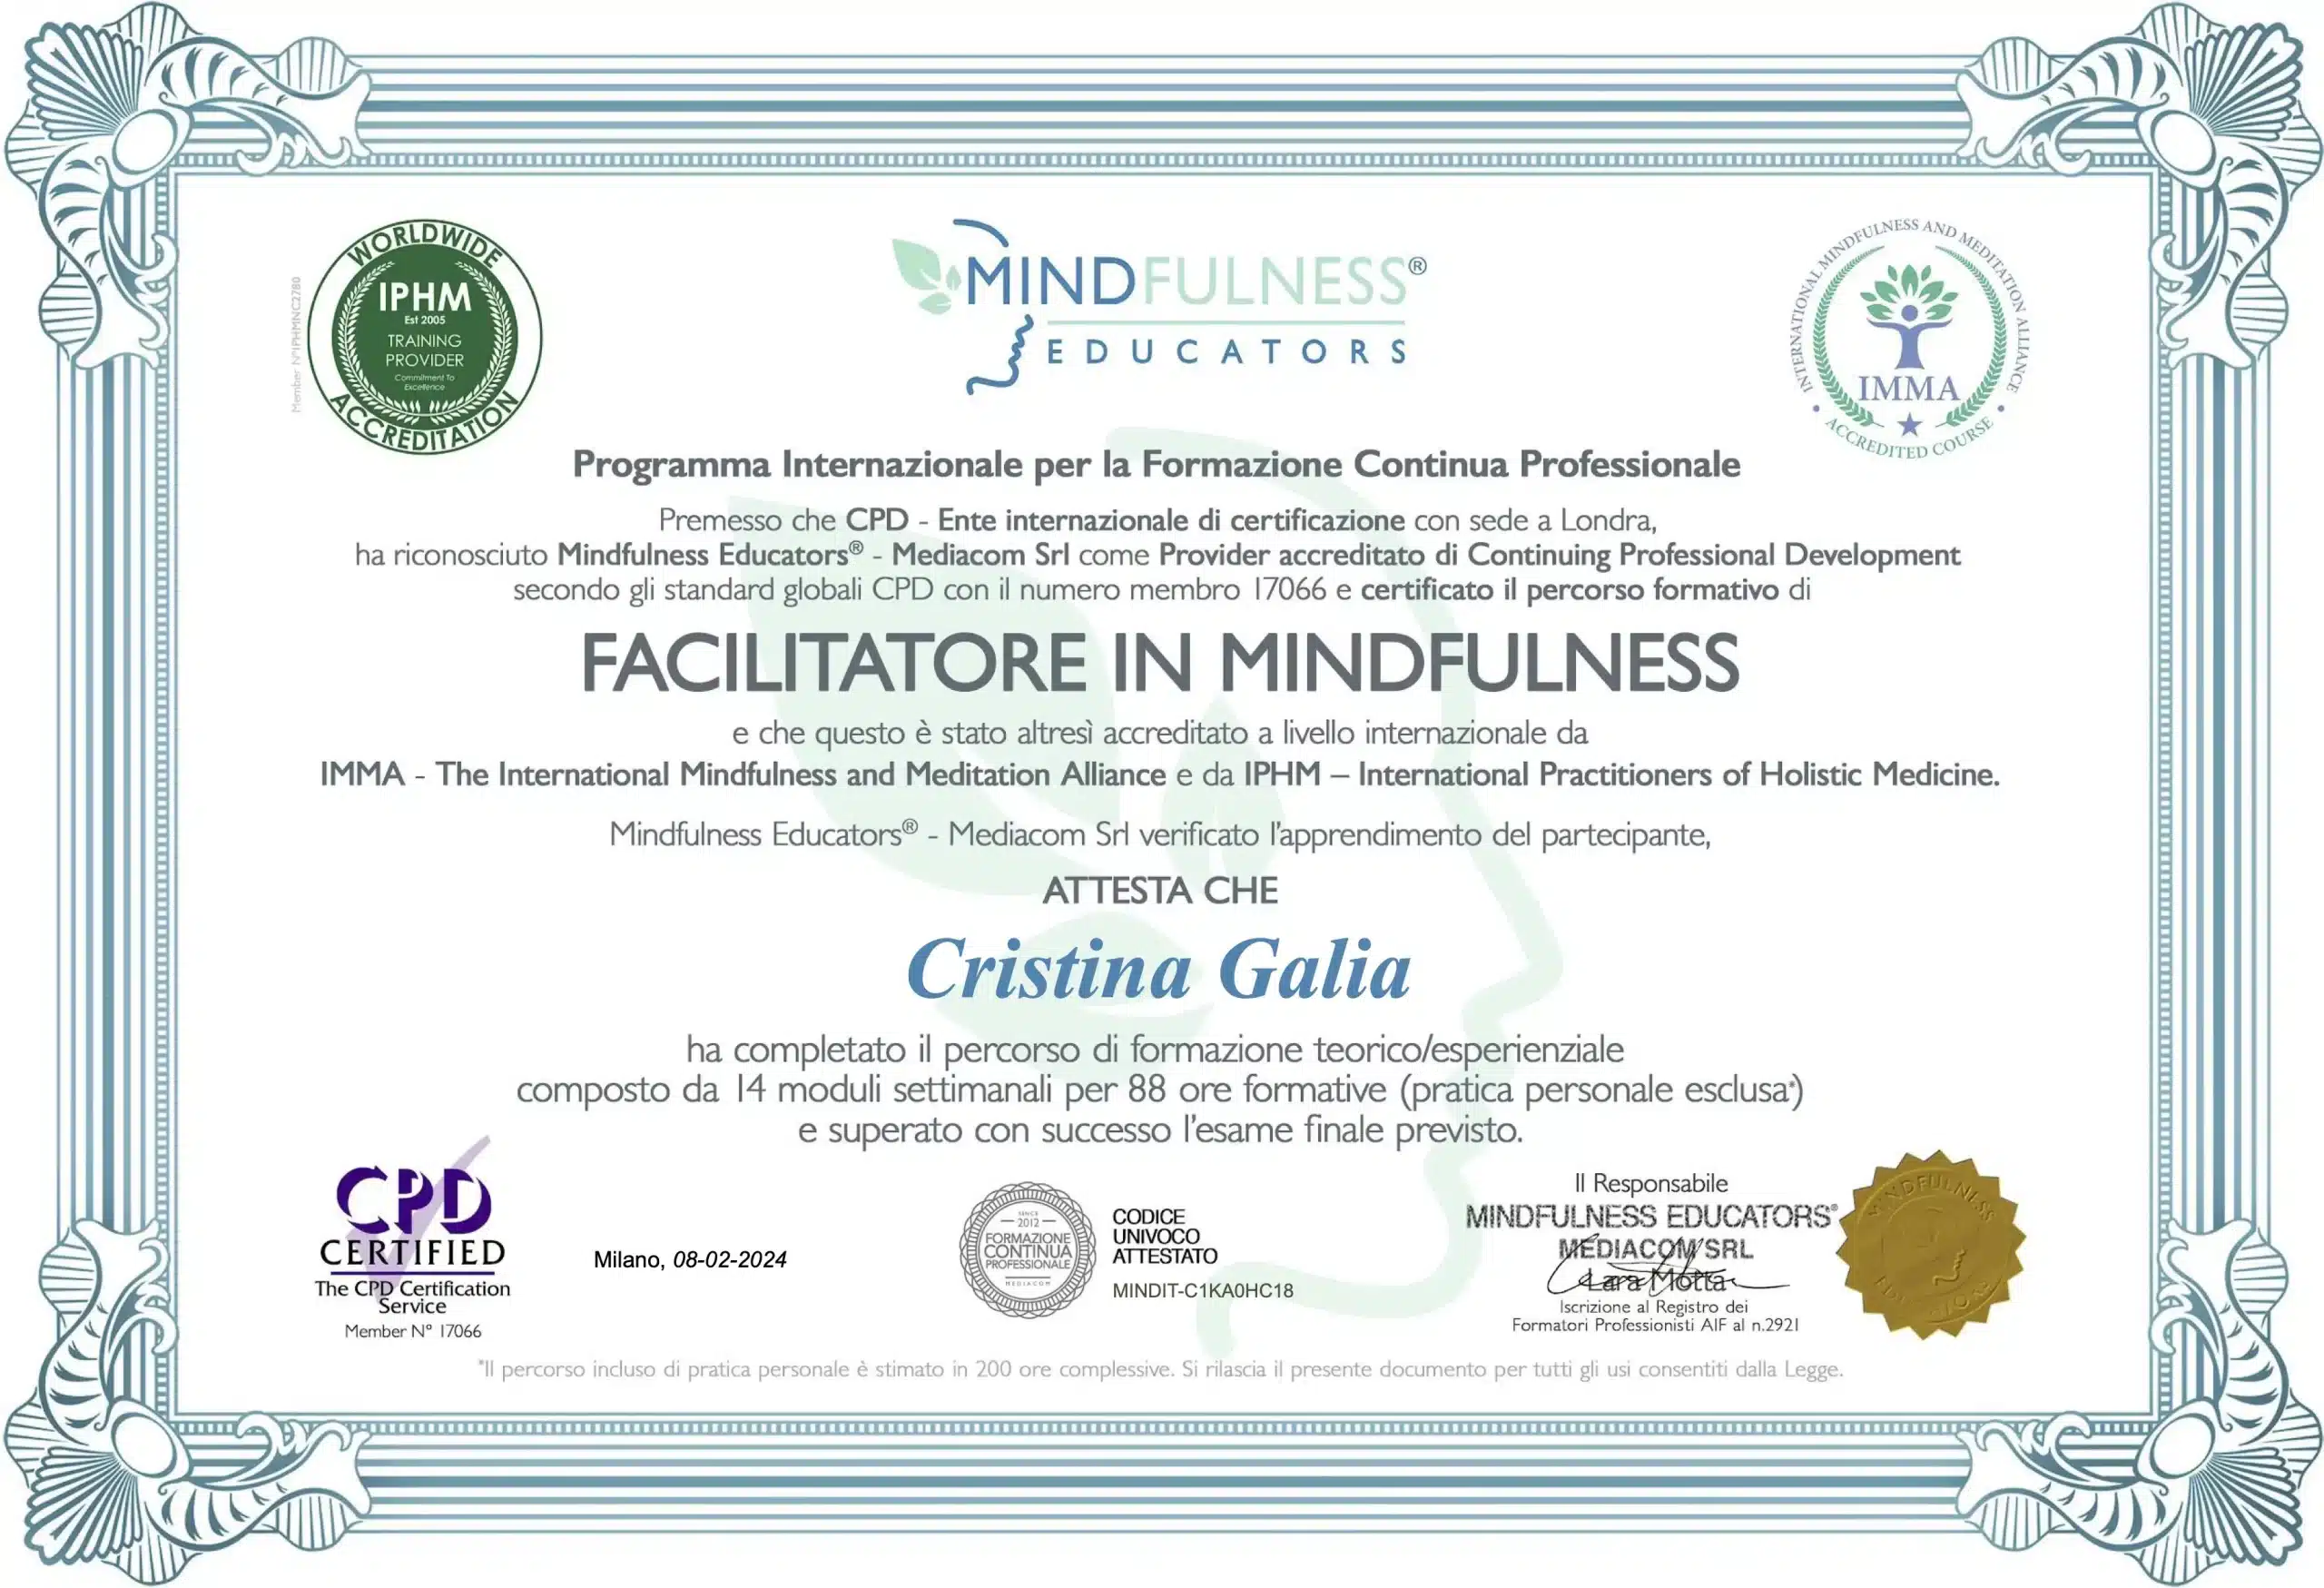 Cristina Galia - Certificato Mindfulness Educators